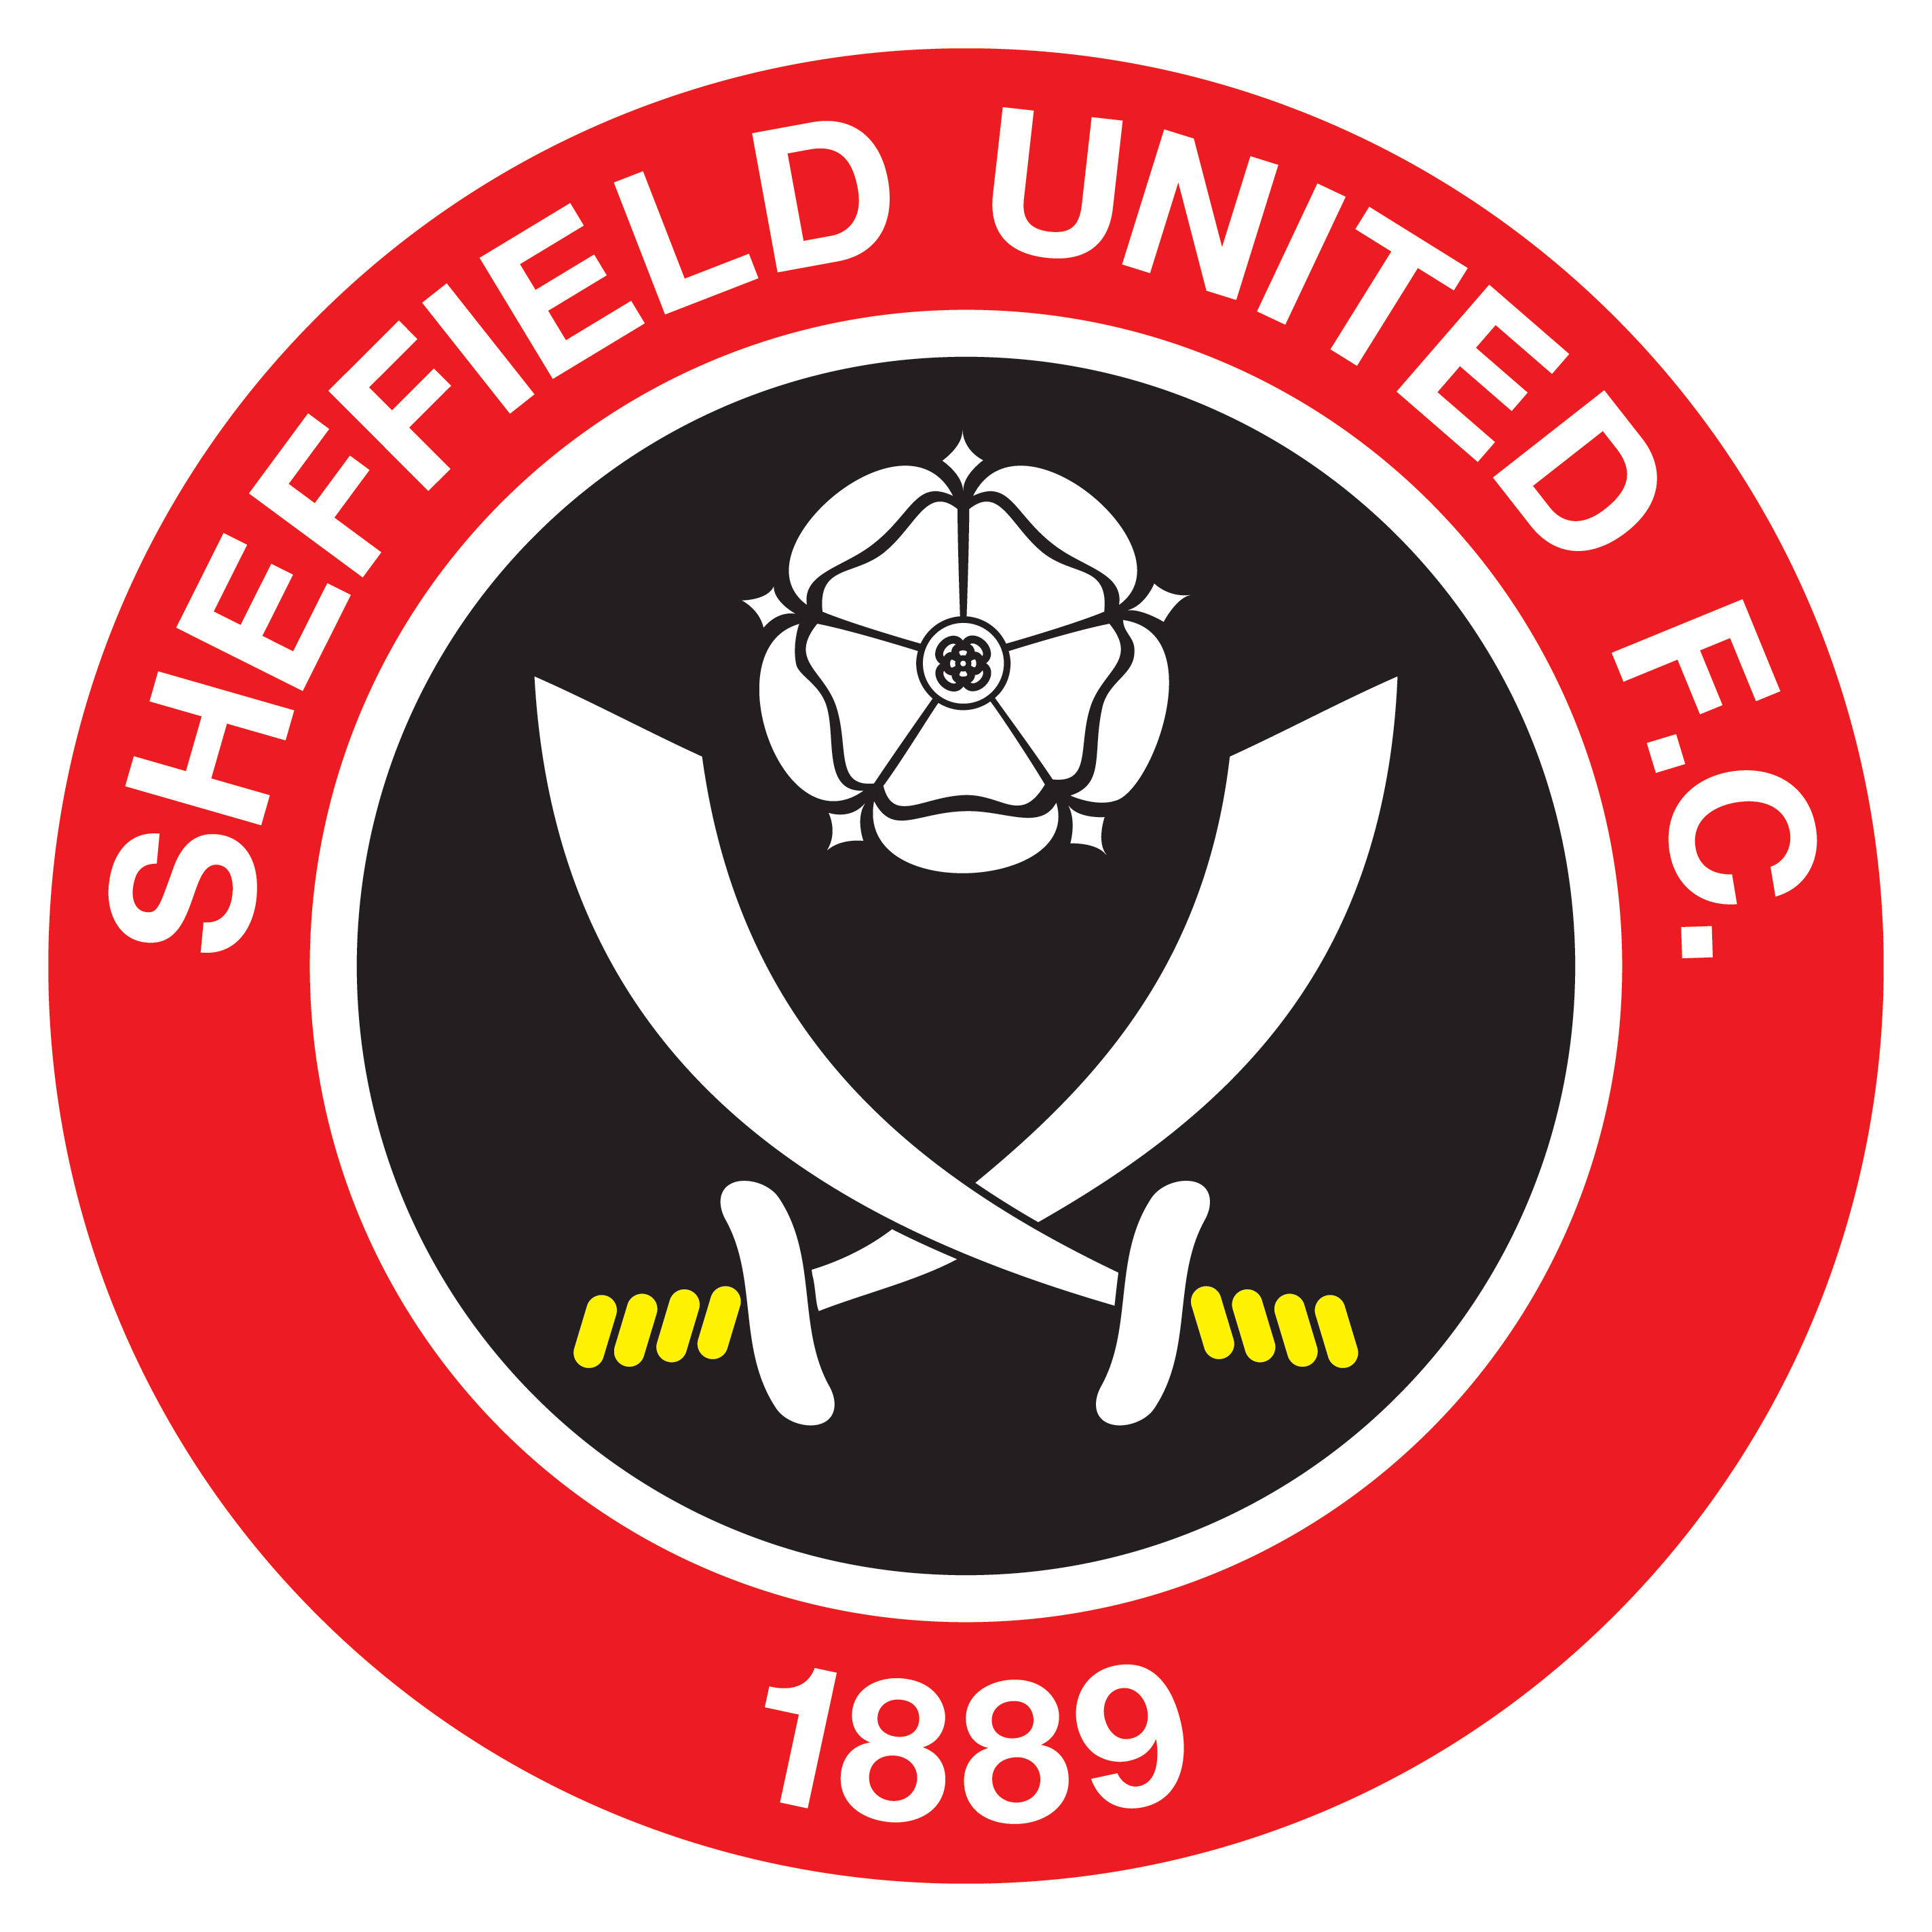 Championship Sheffield